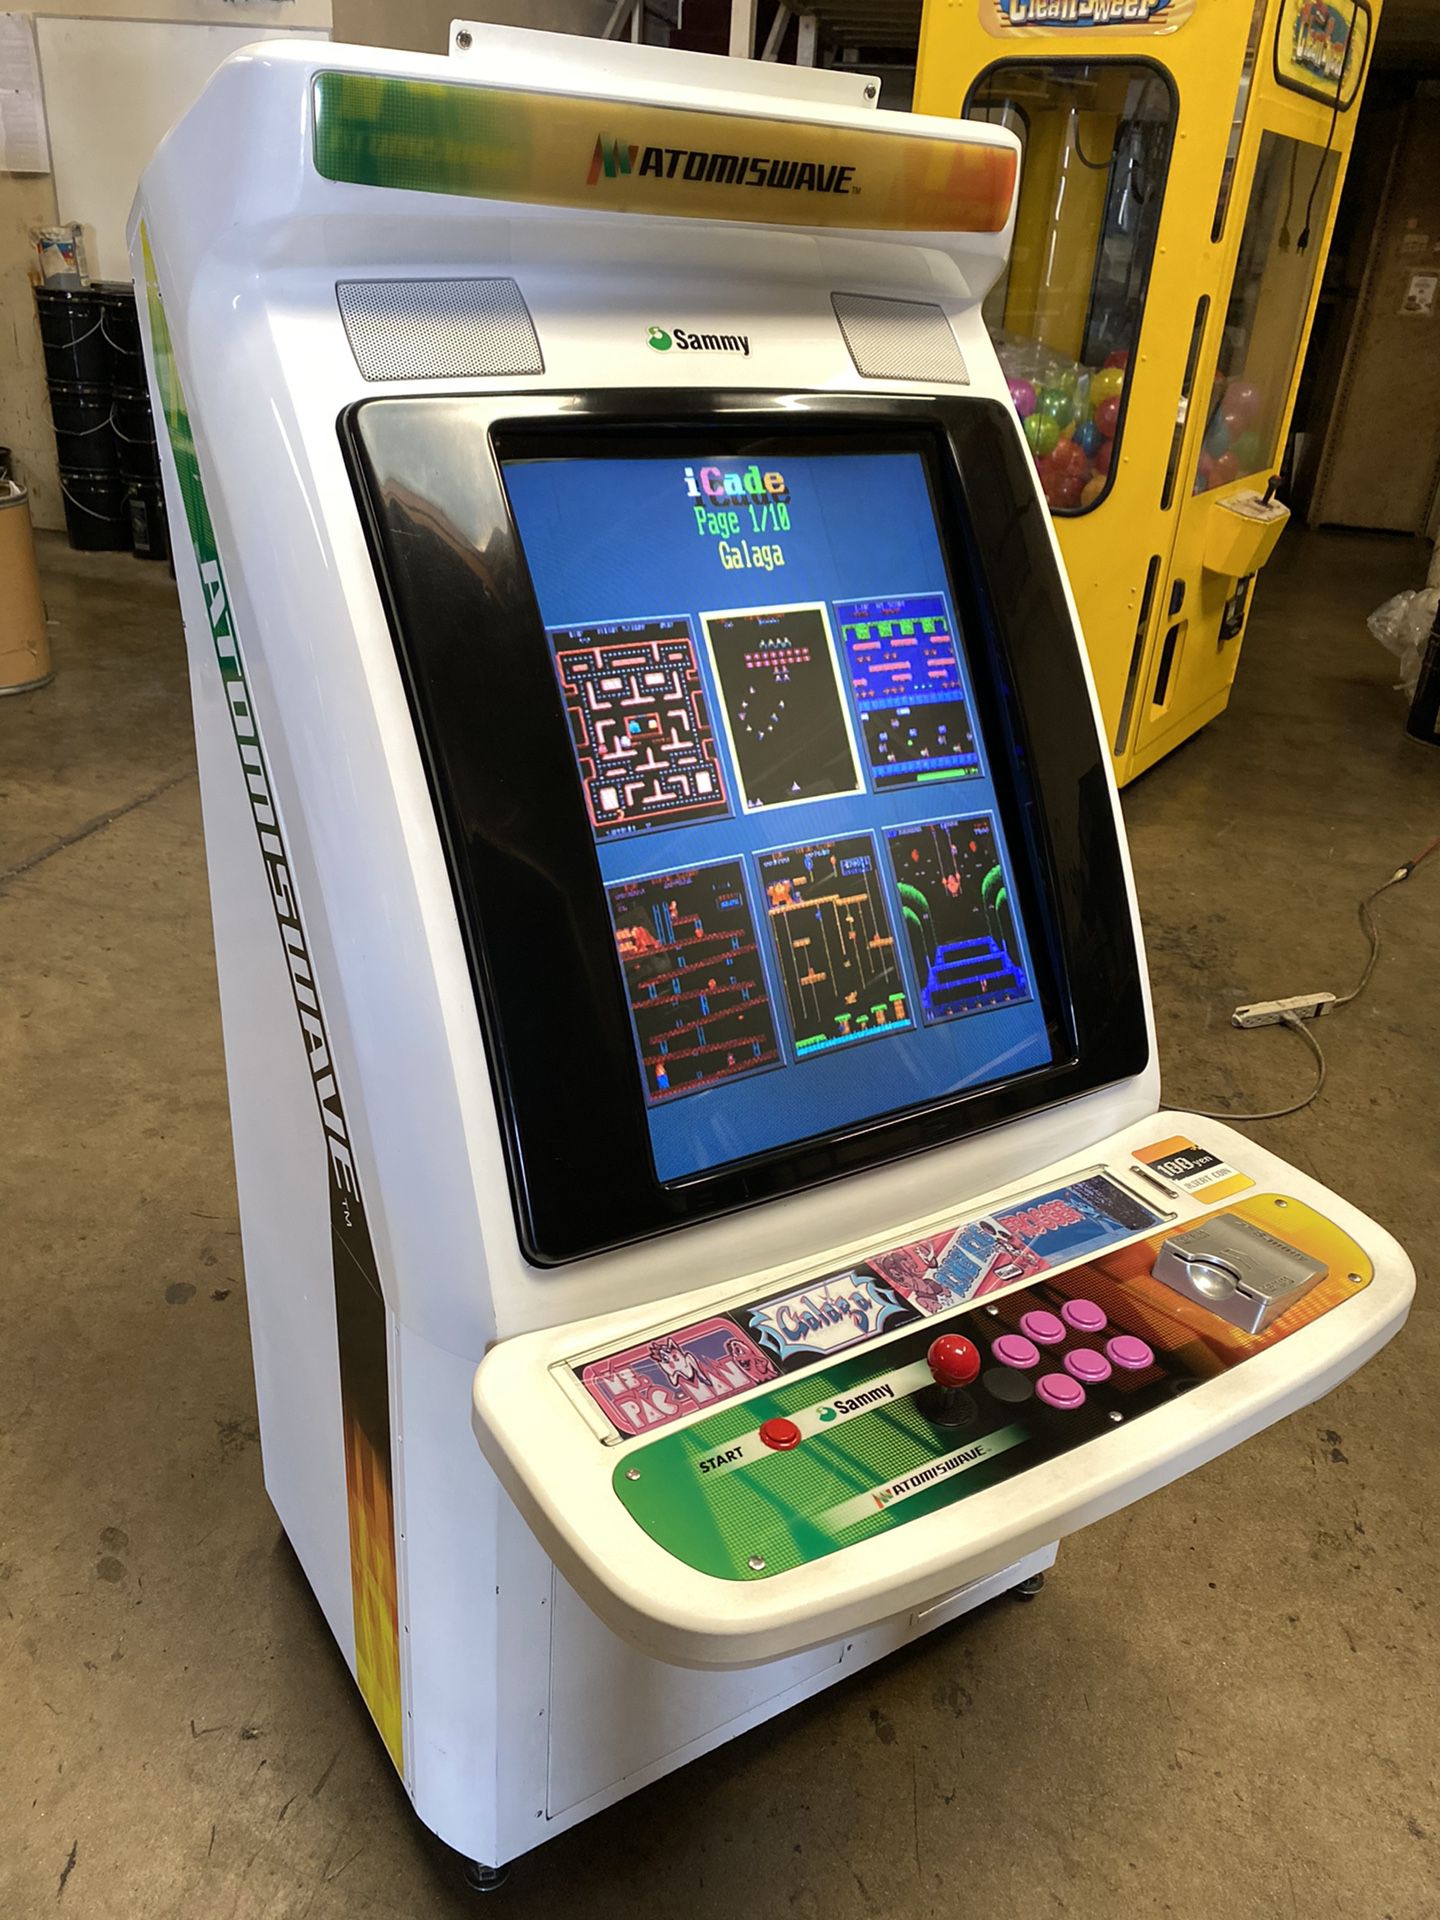 Sammy Atomiswave Candy Cabinet with 60 in 1 Multicade Arcade Video Game Machine